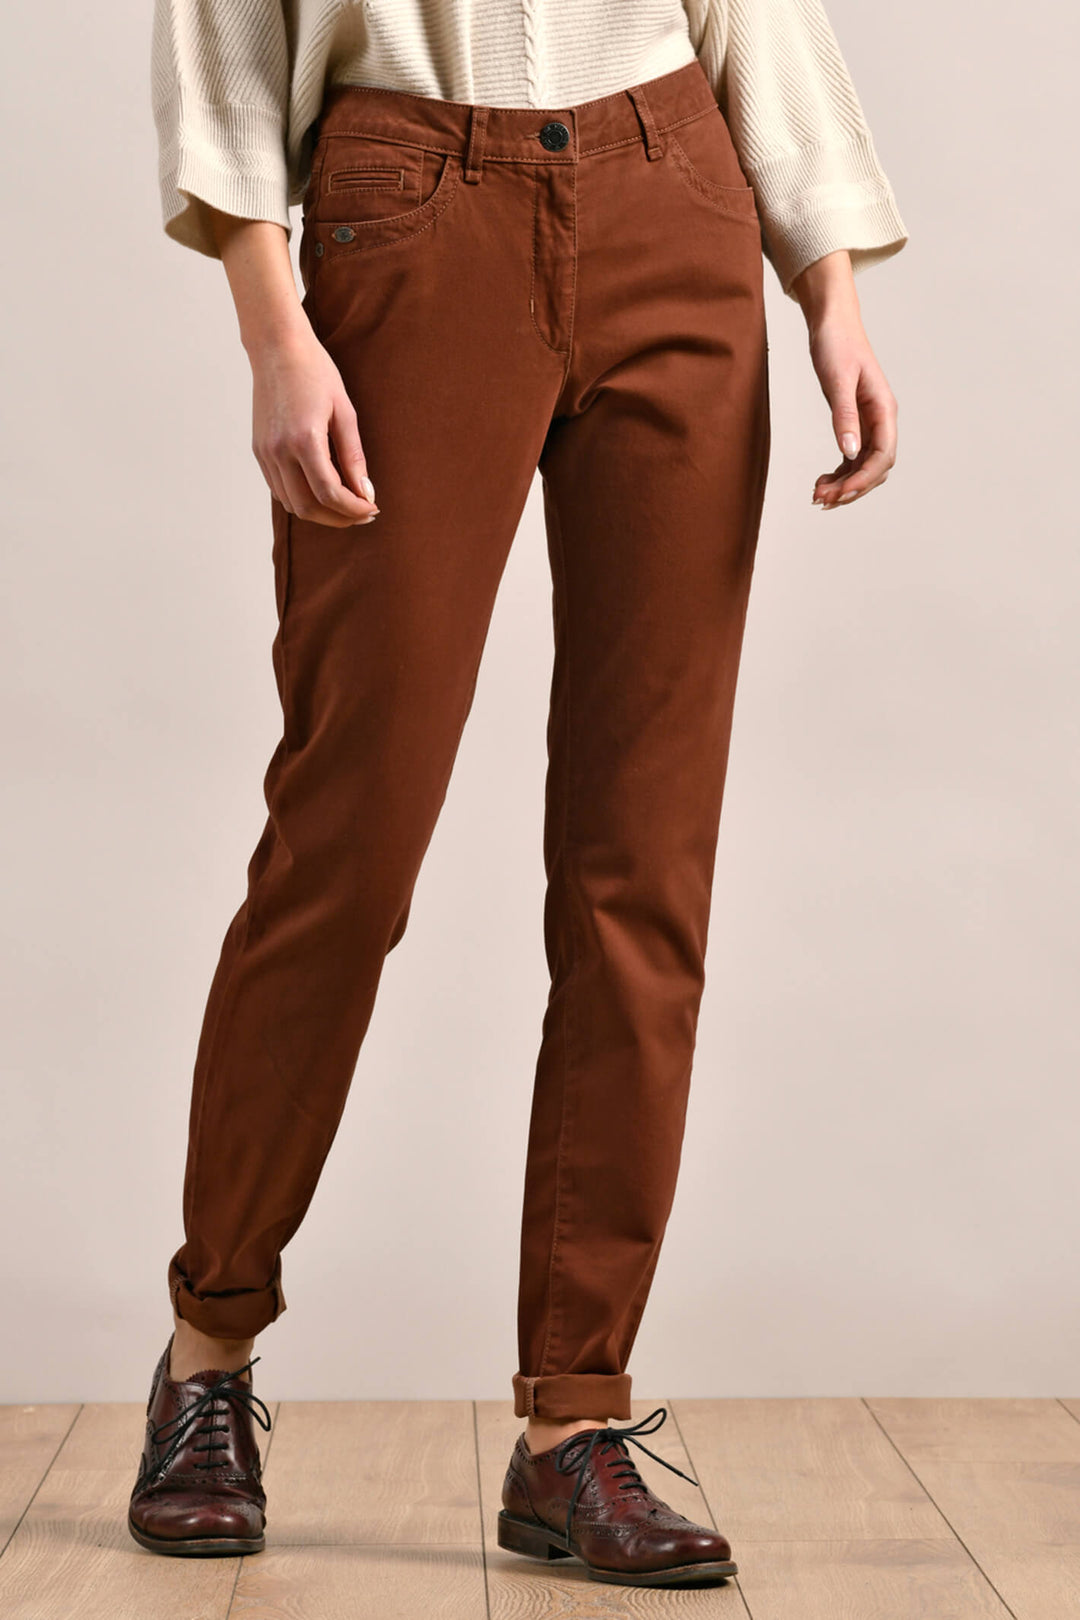 Mat De Misaine Pearl-34727 U703 Chocolat Brown Jeans - Shirley Allum Boutique